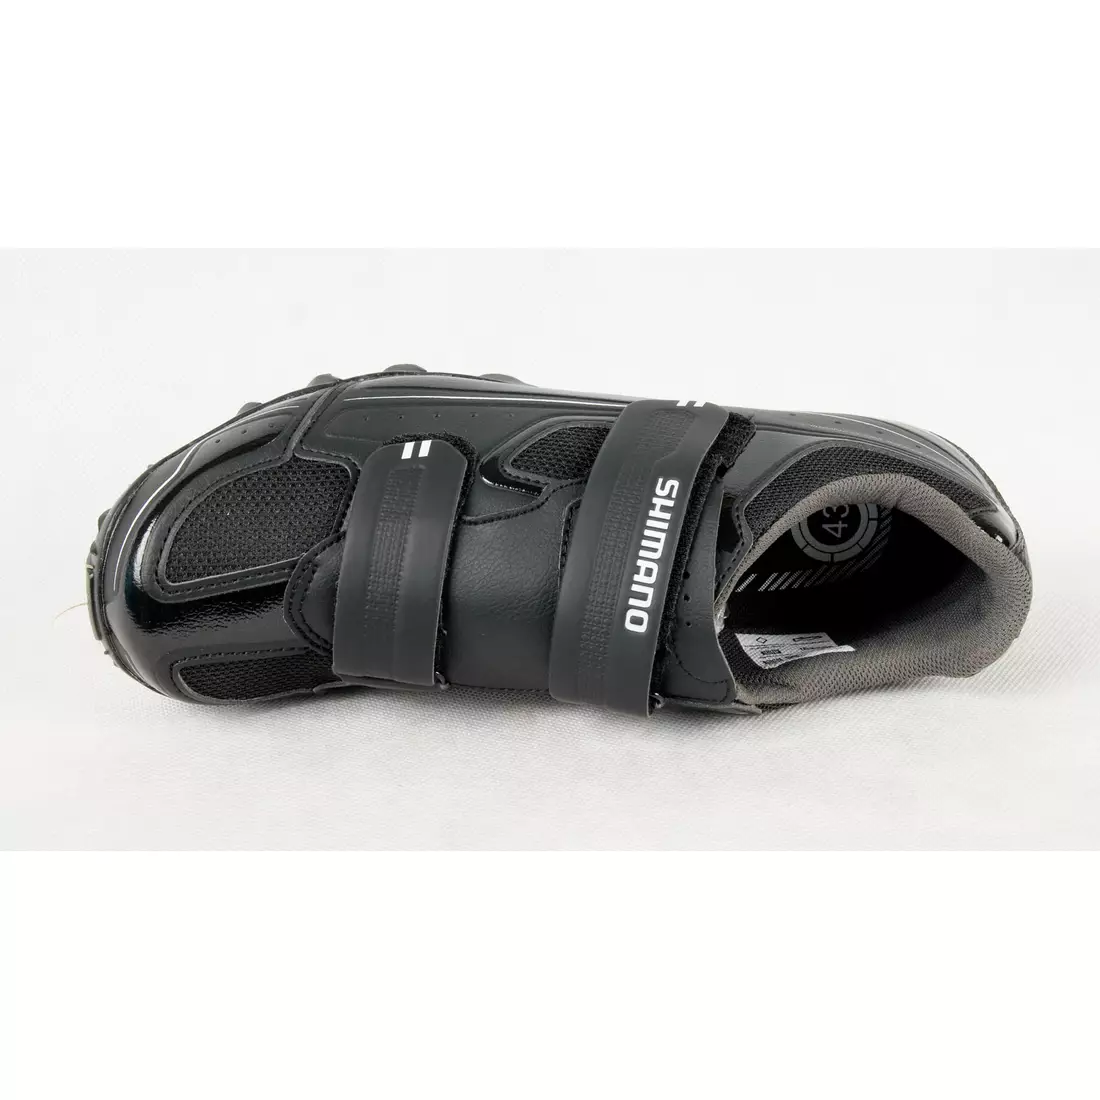 SHIMANO SH-M065 MTB cycling shoes - black